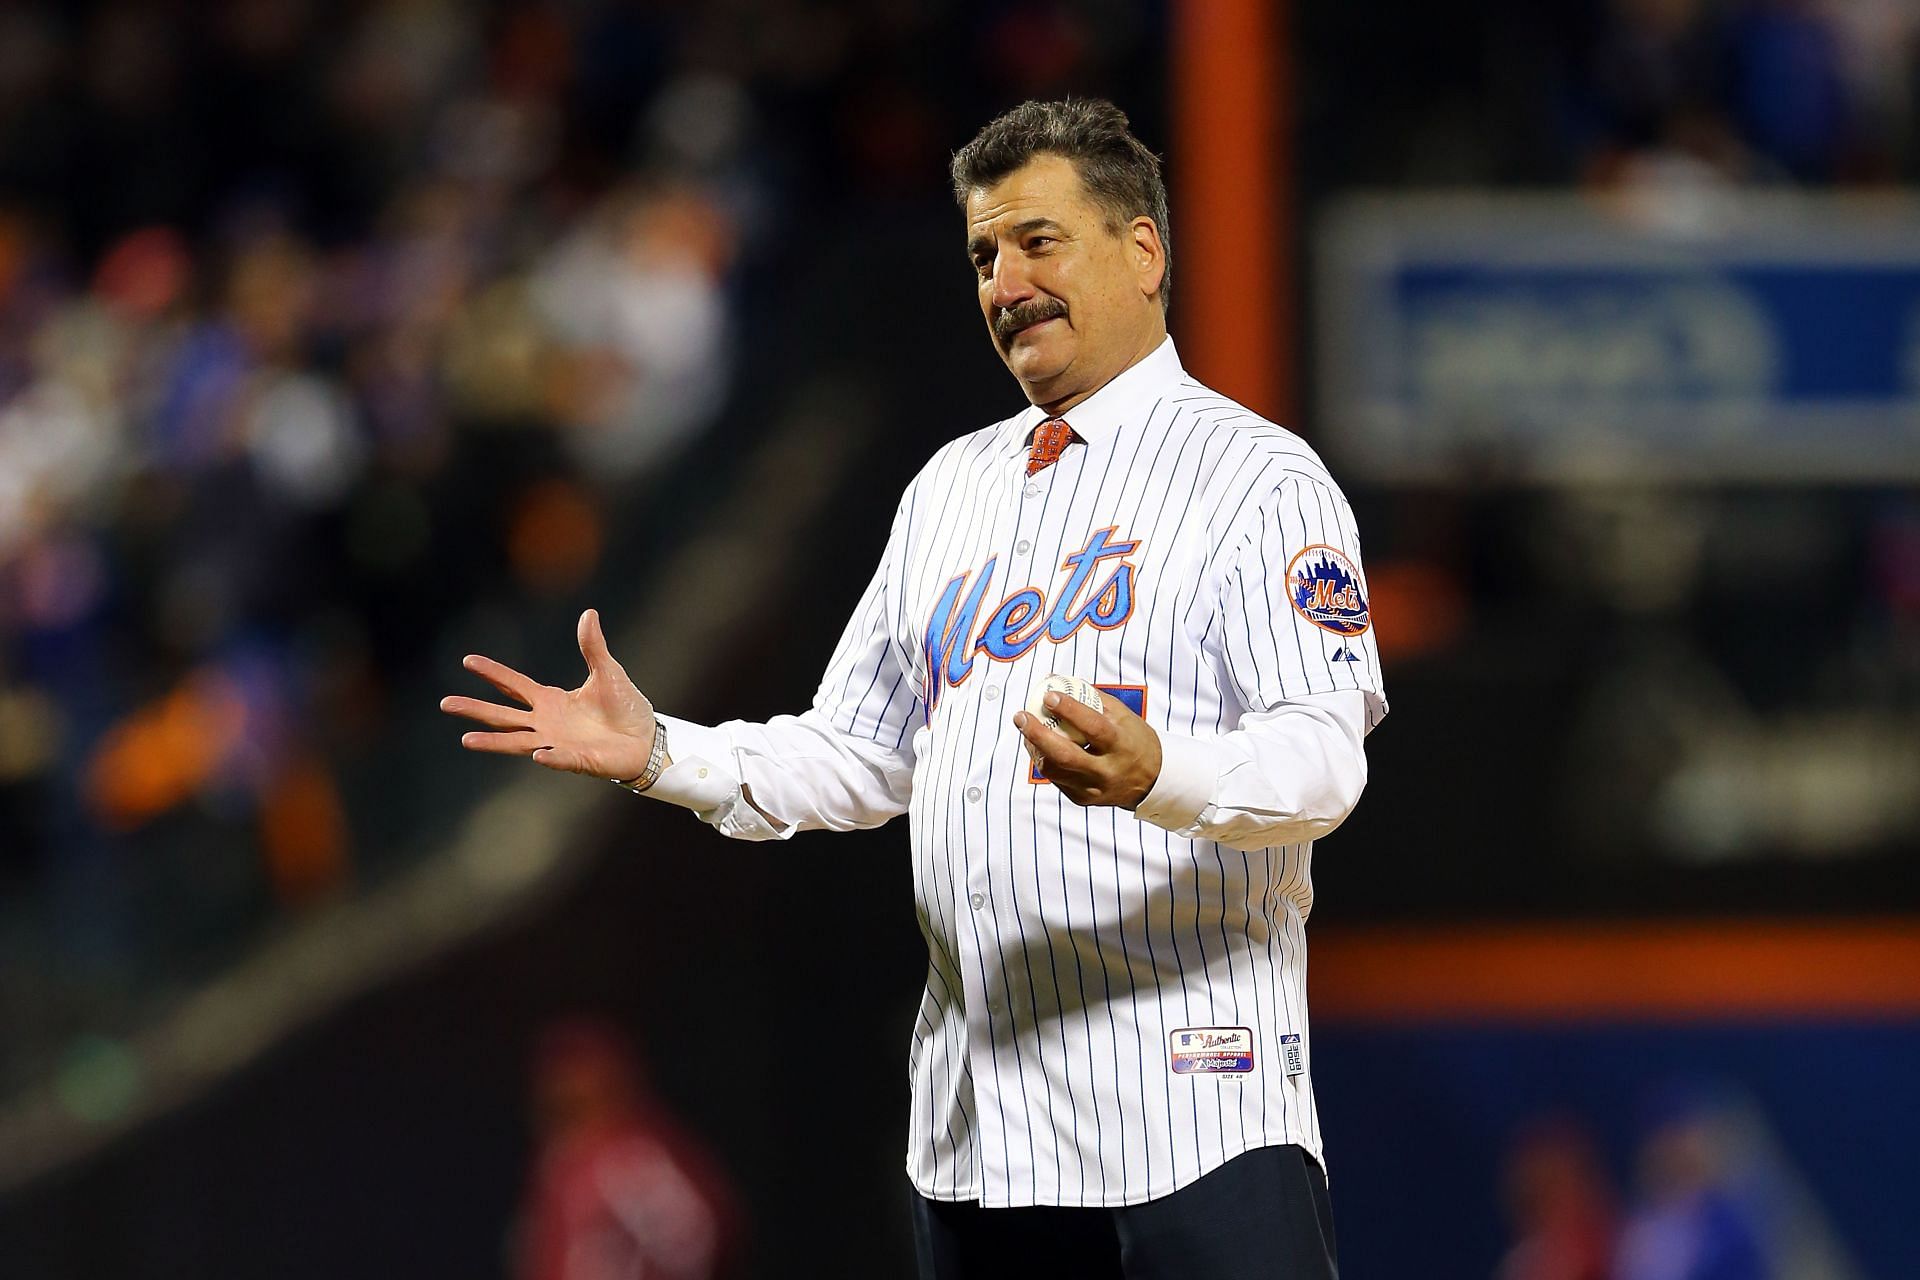 If Mets' Keith Hernandez belongs in Cooperstown, then Yankees